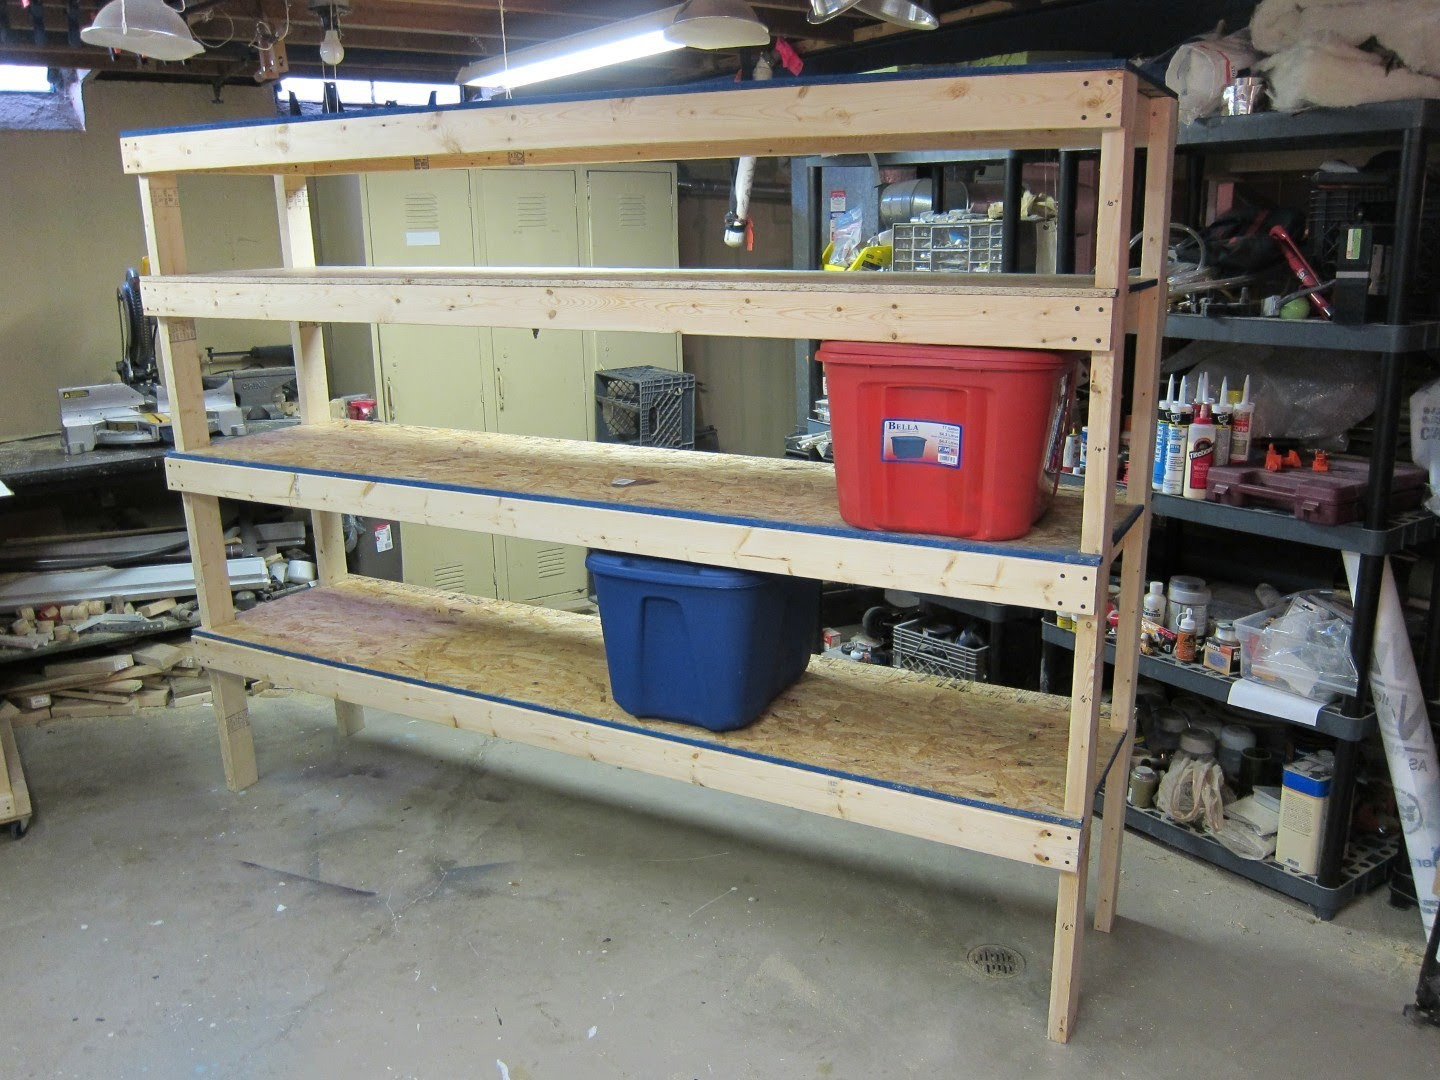 Best ideas about Garage Storage Diy
. Save or Pin 20 DIY Garage Shelving Ideas Now.